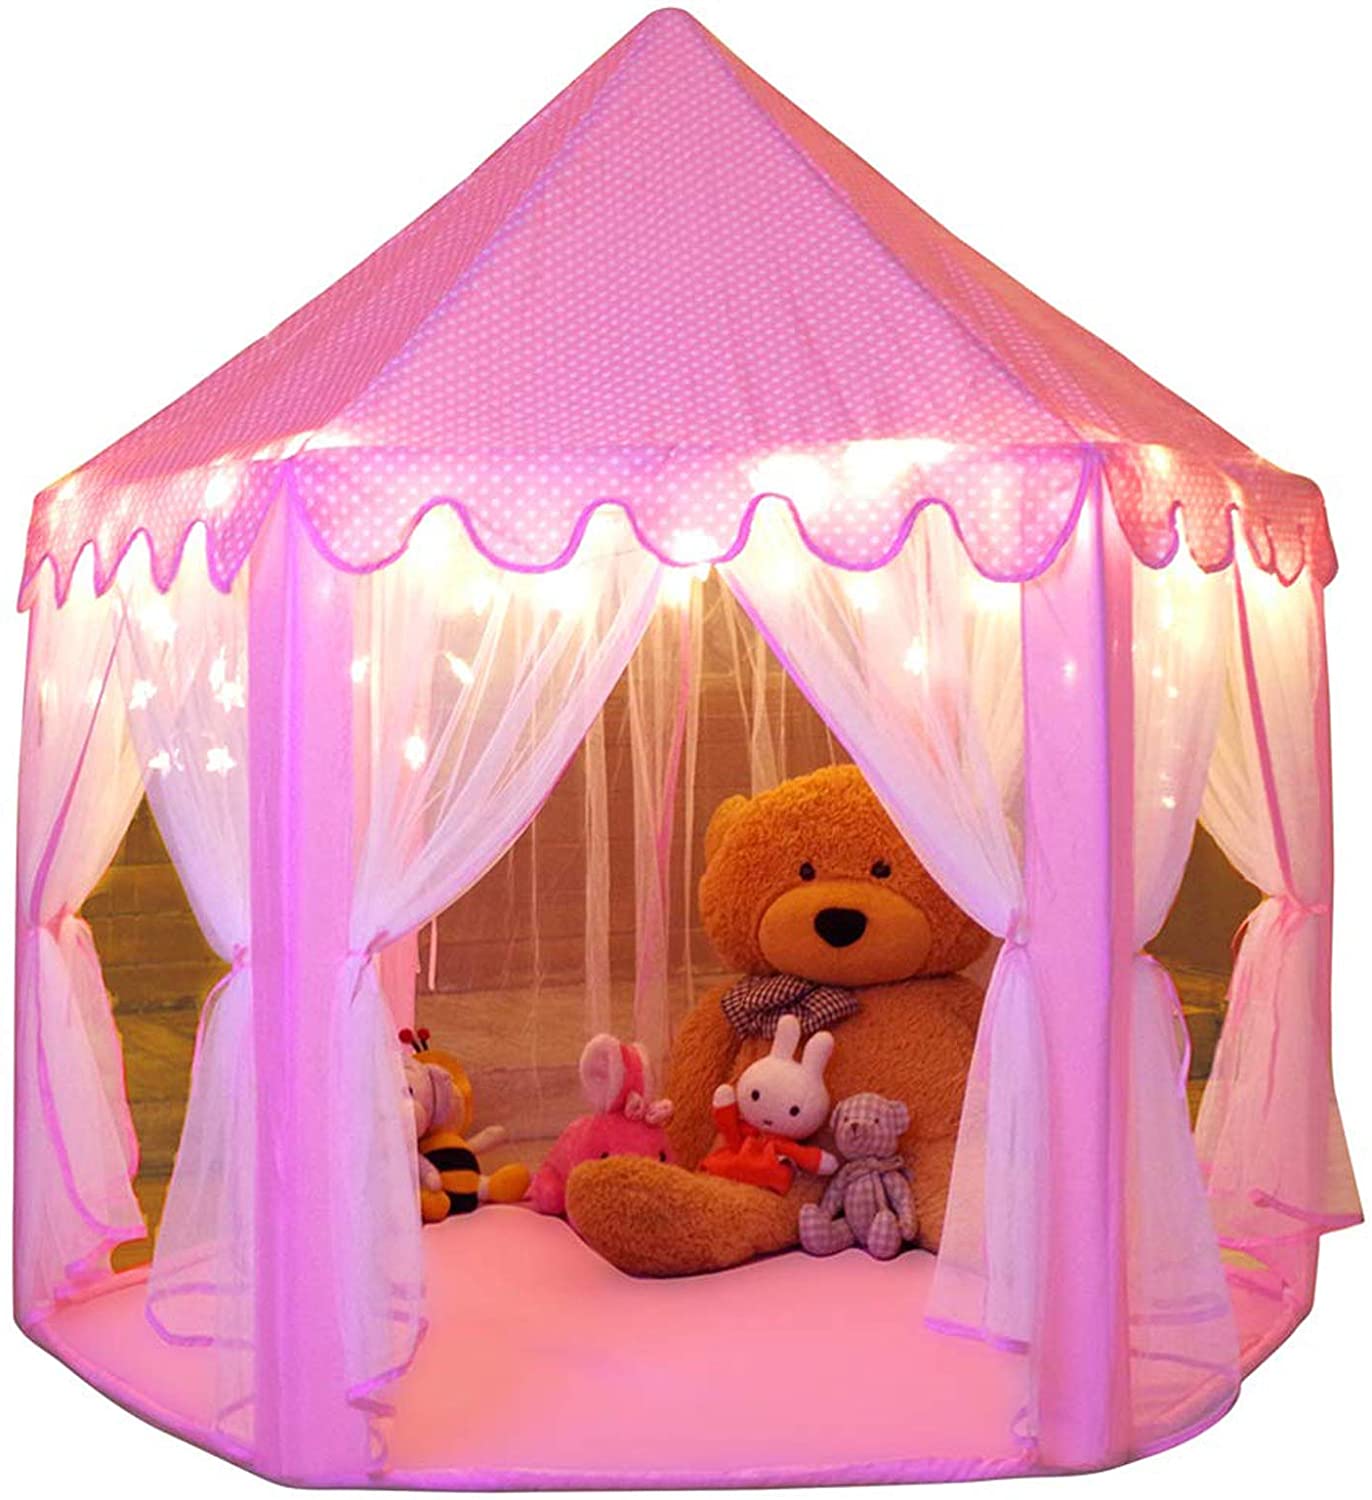 Monobeach Taffeta Indoor Playhouse Tent For Kids